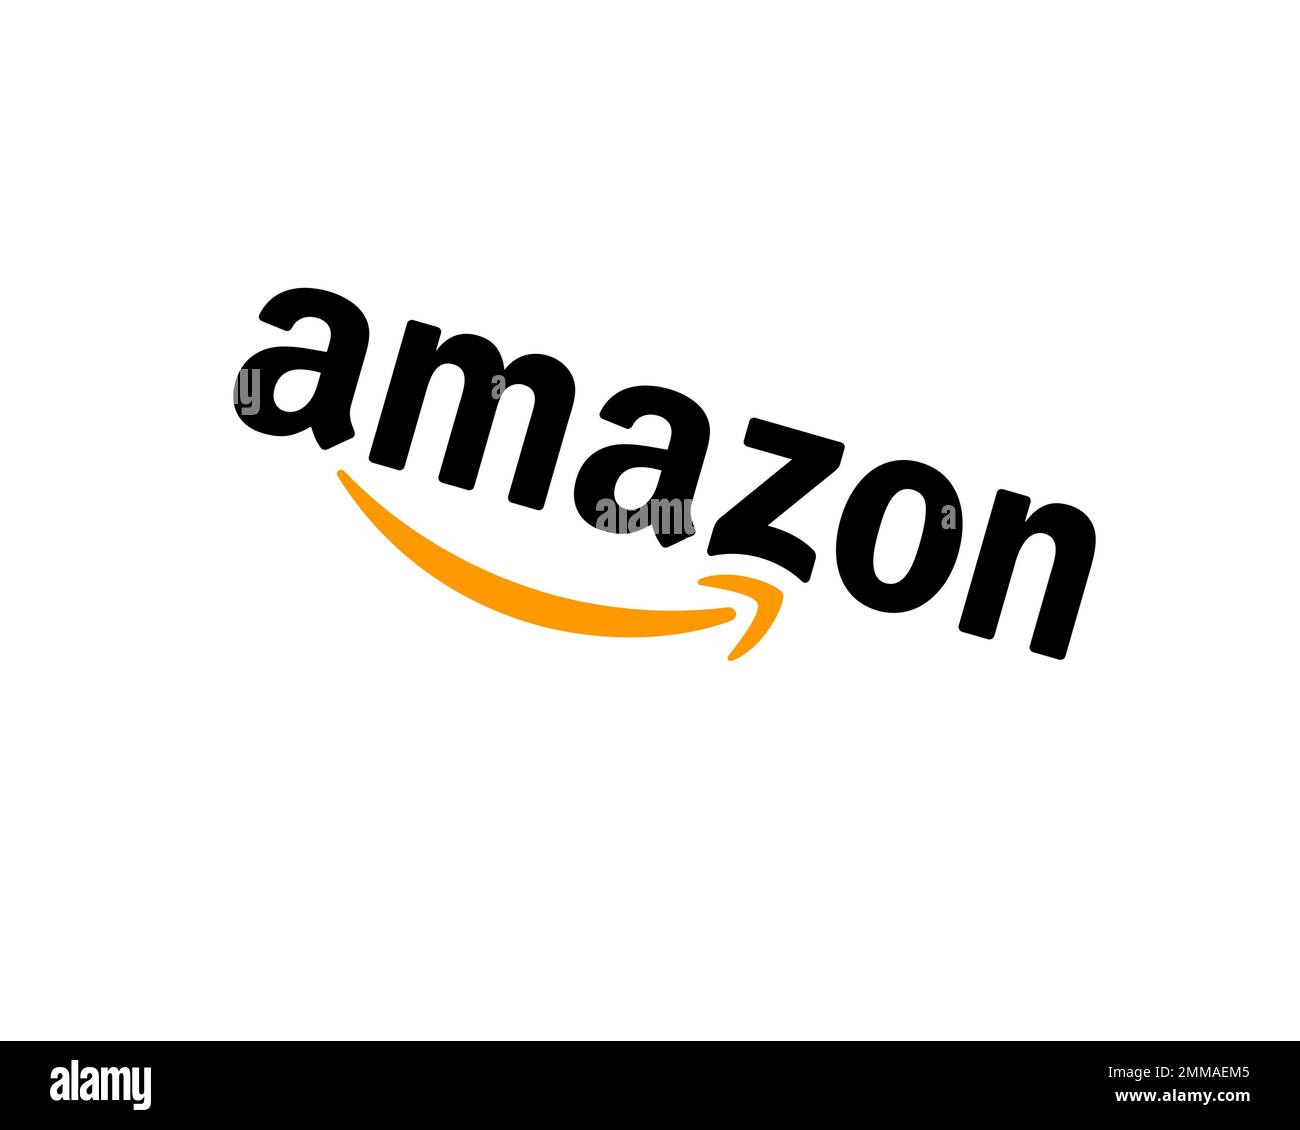 Amazon, ruotato, sfondo bianco, logo, marchio Foto stock - Alamy